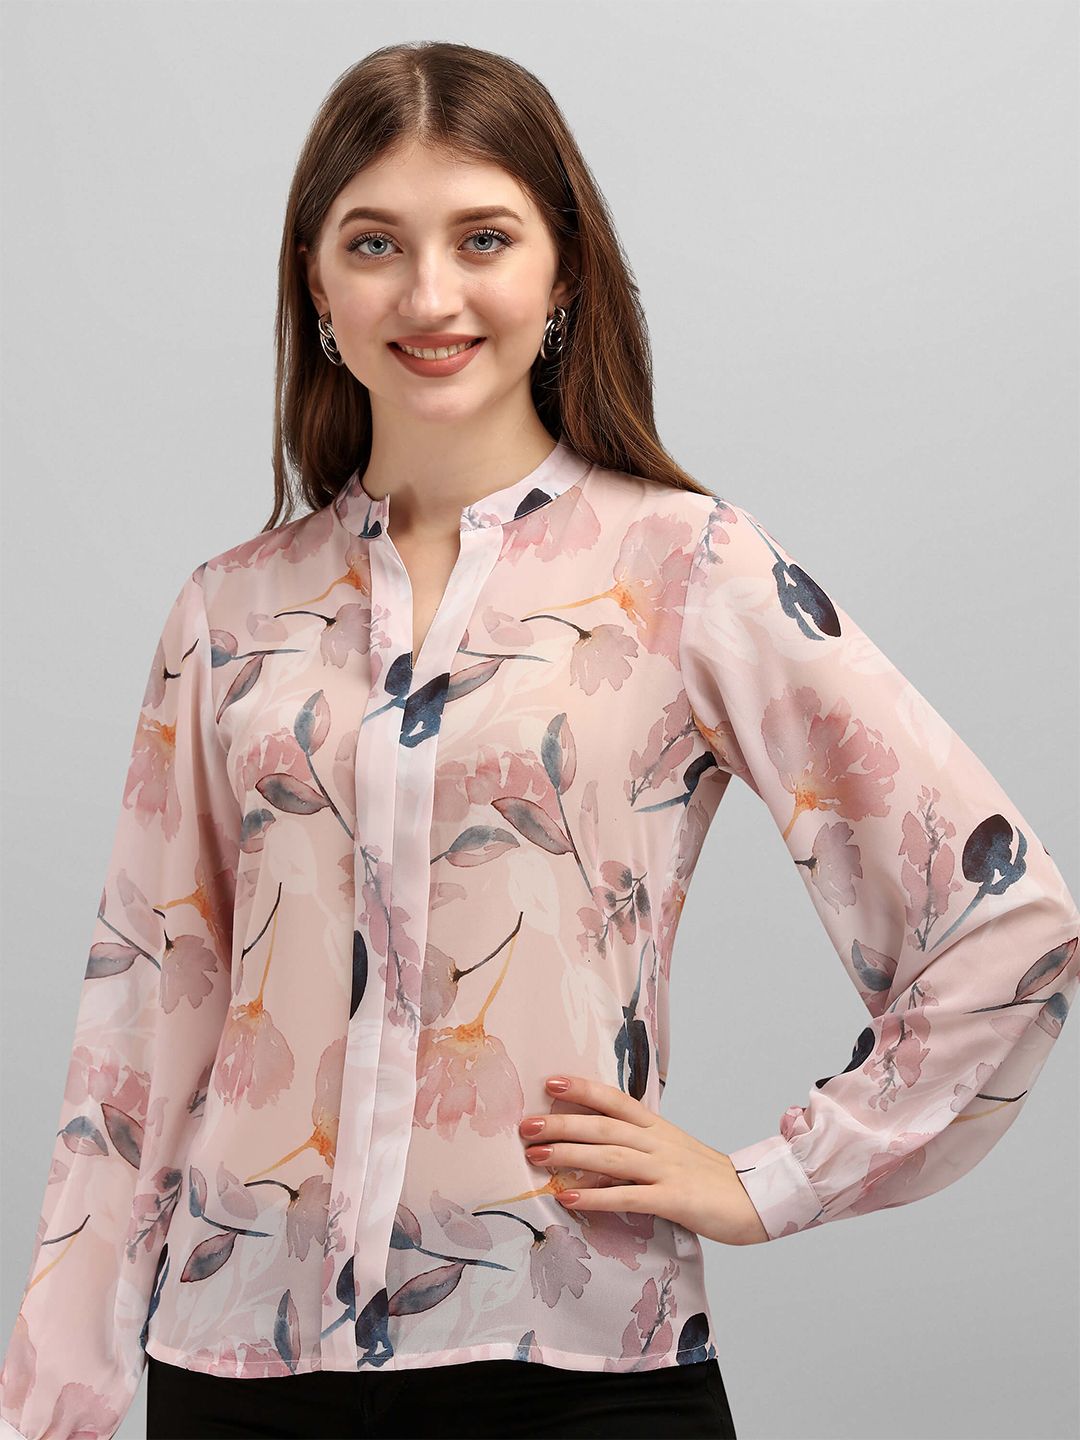 Masakali Co Pink Floral Print Mandarin Collar Georgette Shirt Style Top Price in India